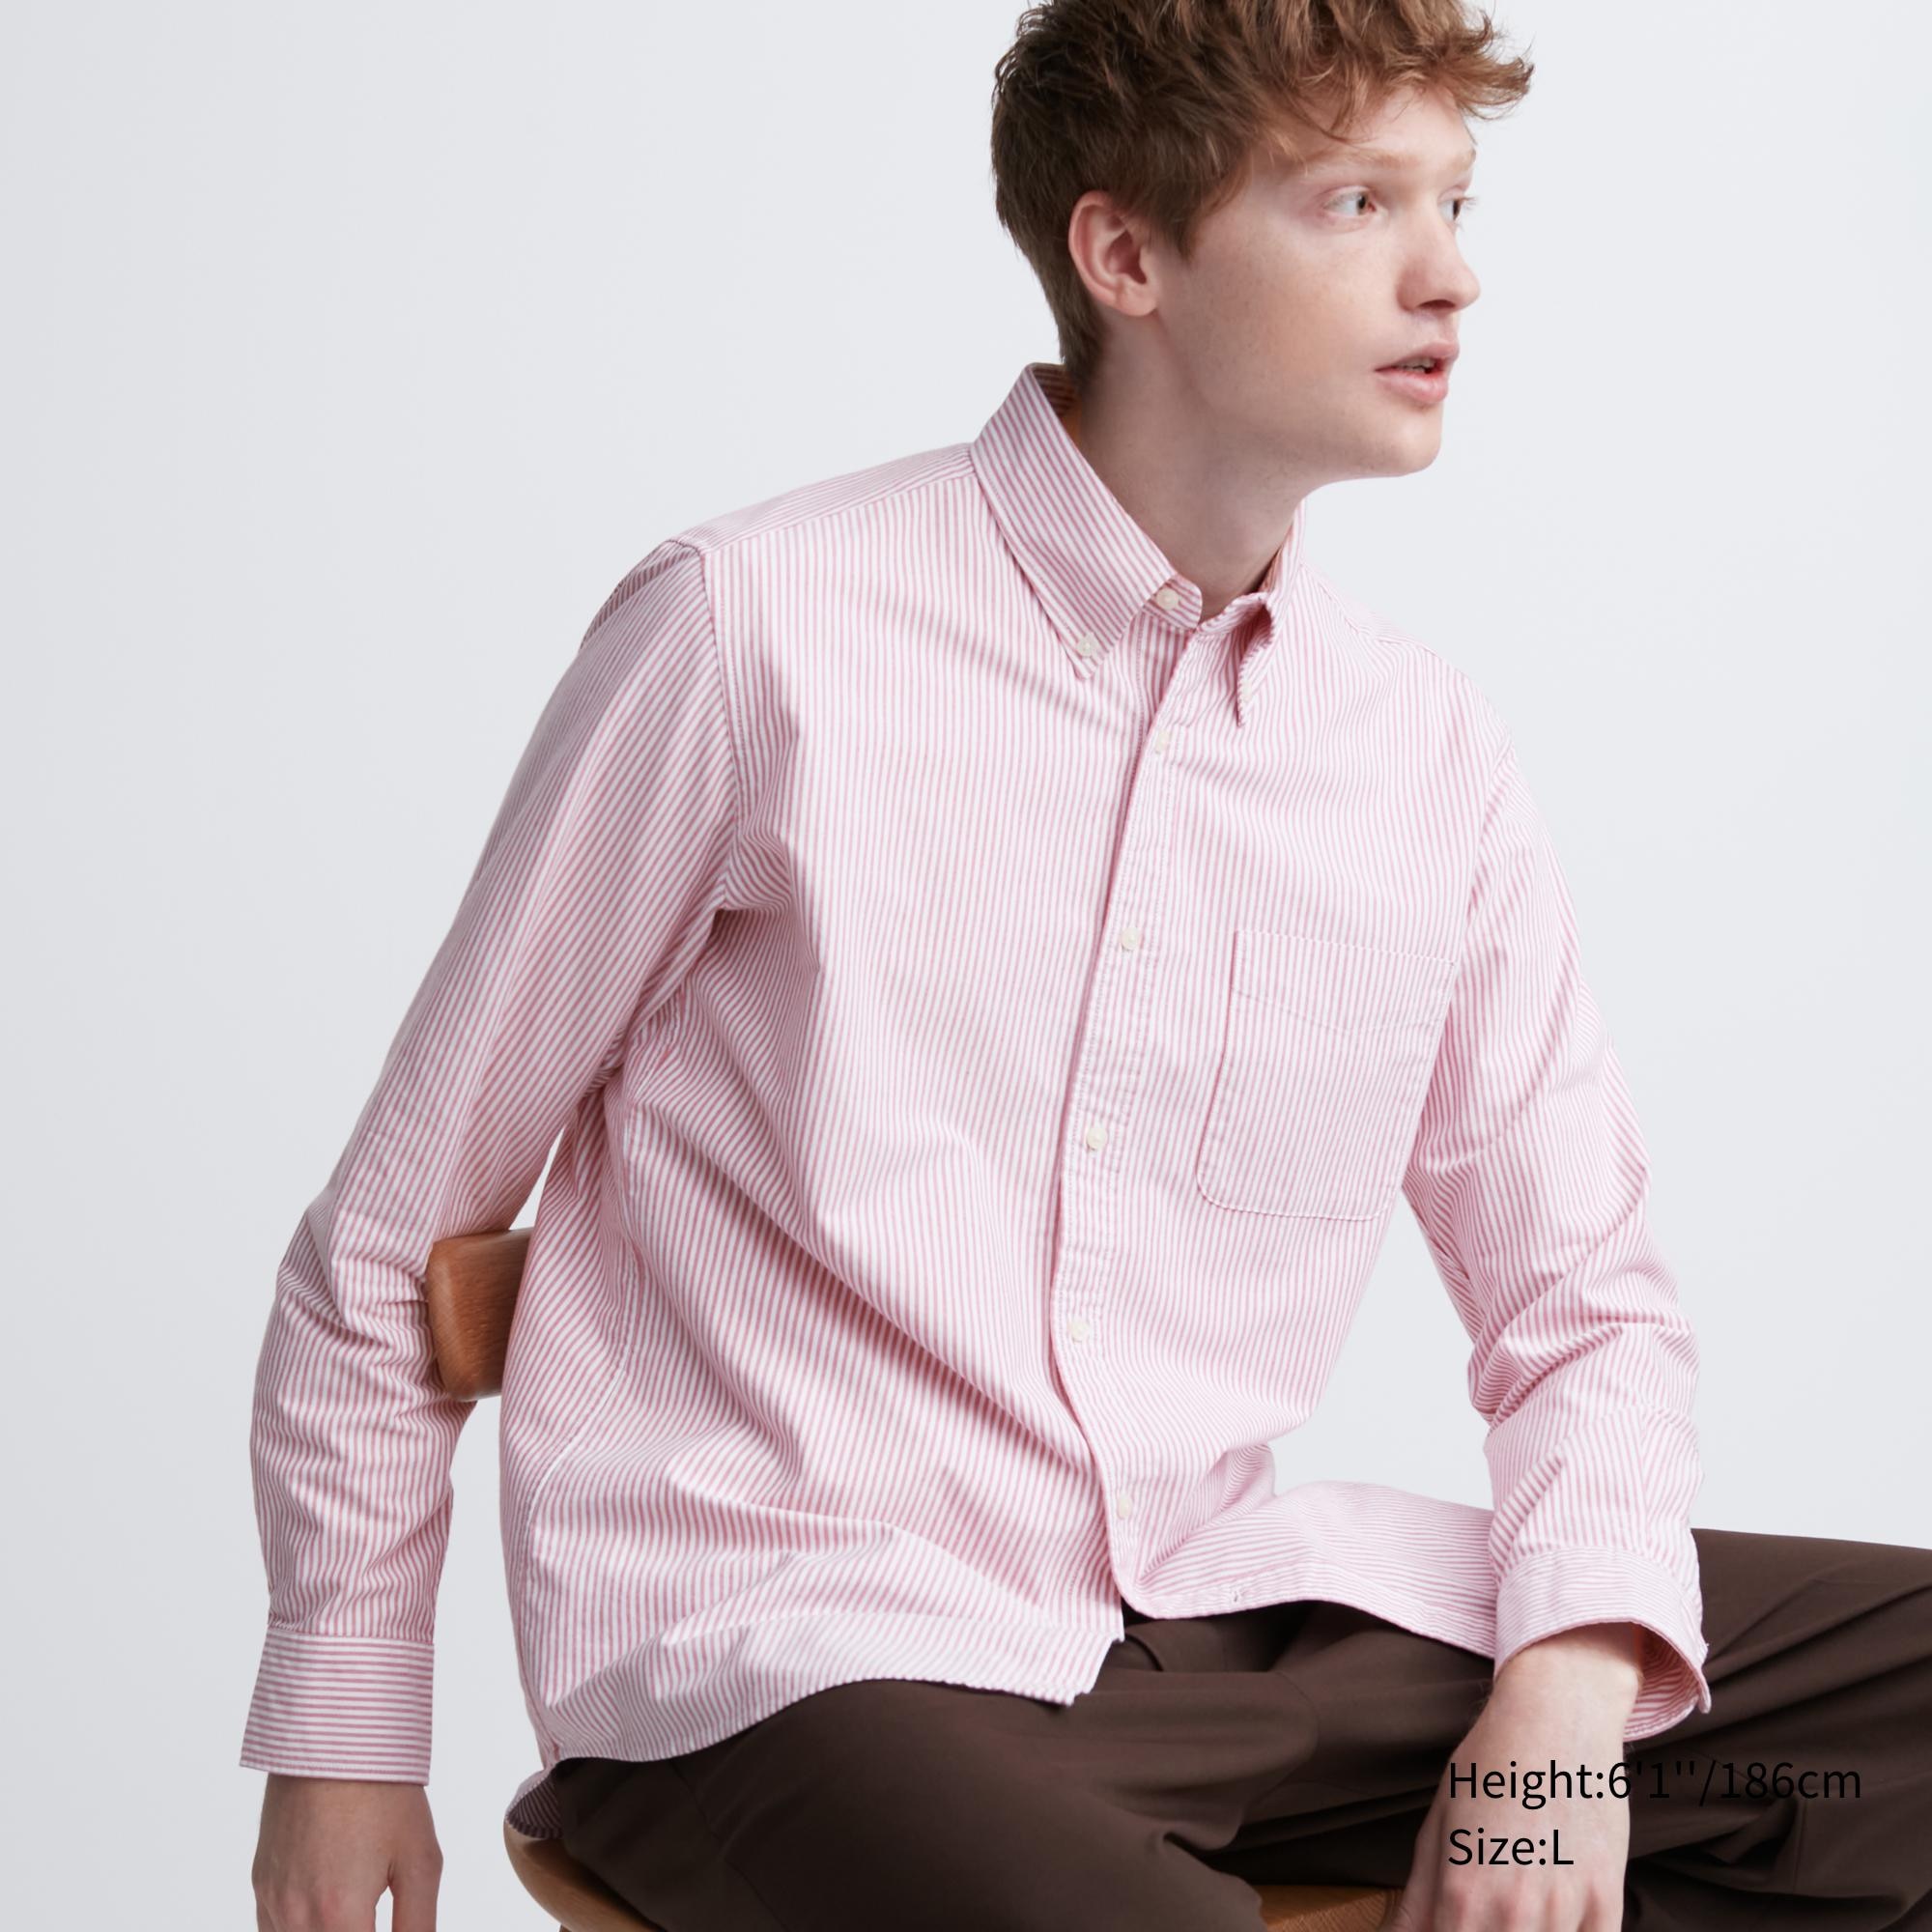 19 Best Men's Dress Shirts 2023: Cool, Crisp Button-Ups for Corporate Life